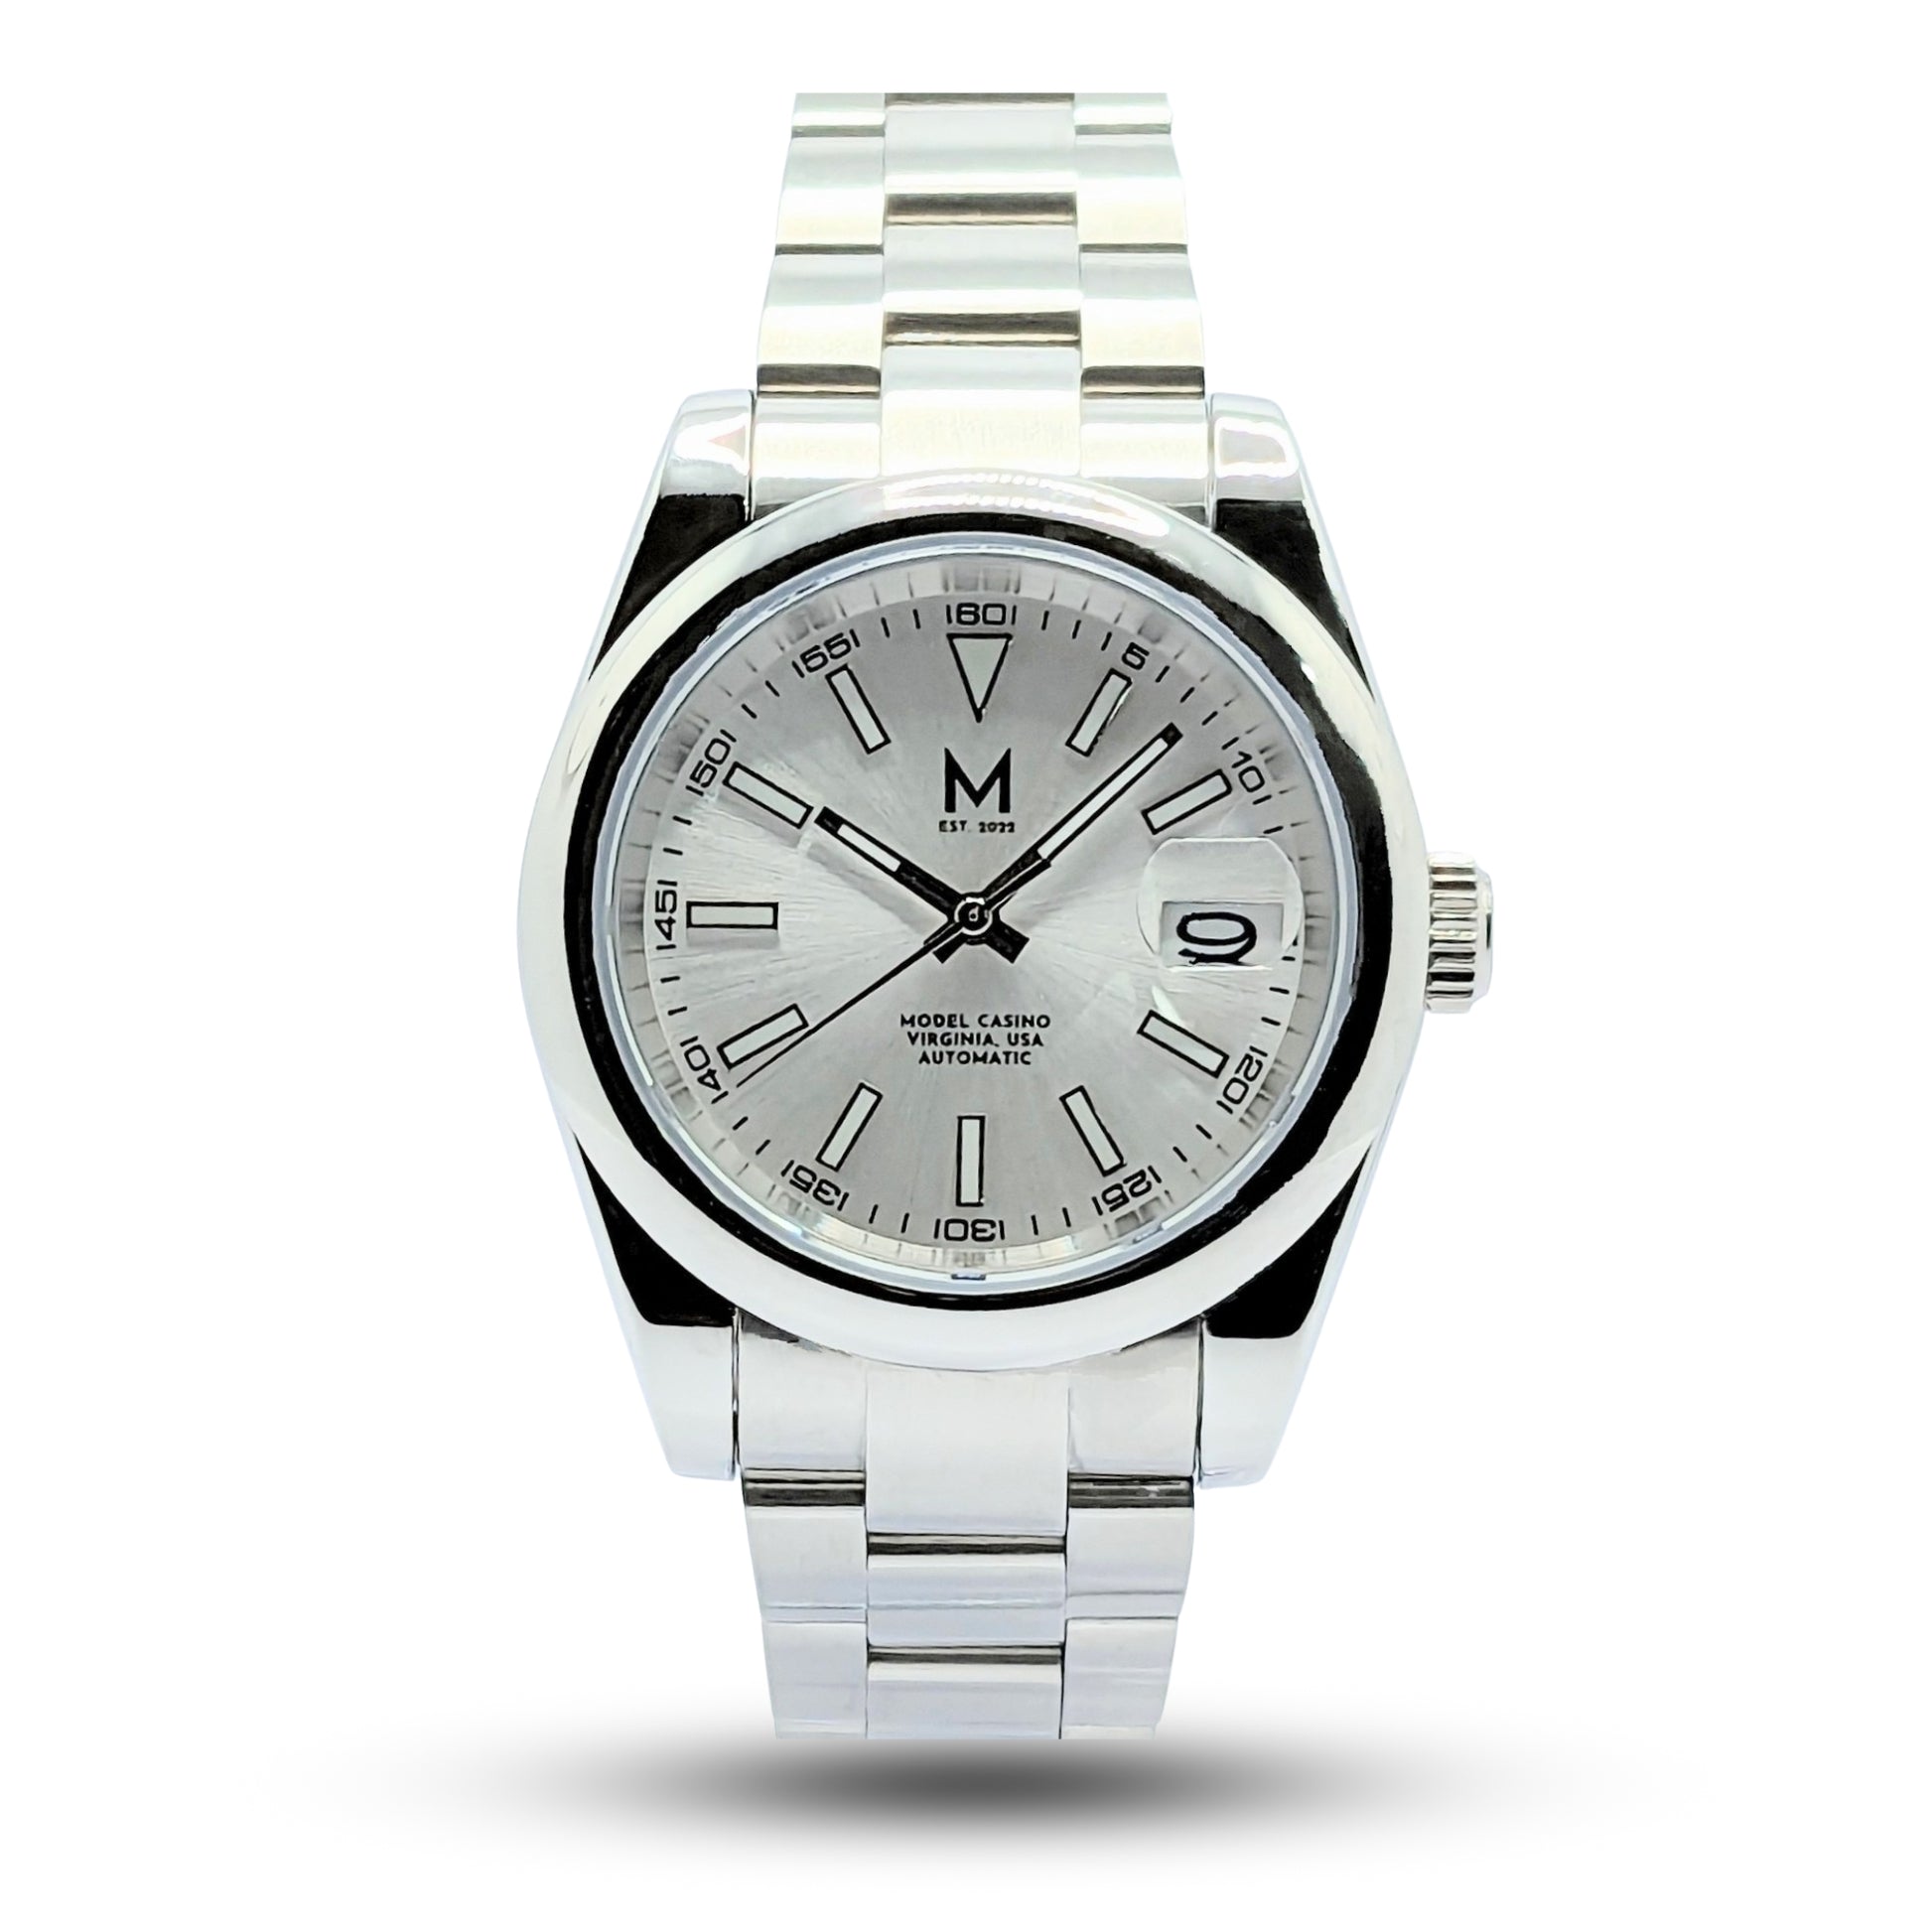  The Casino Vintage Timepiece - Monterey Watch Co